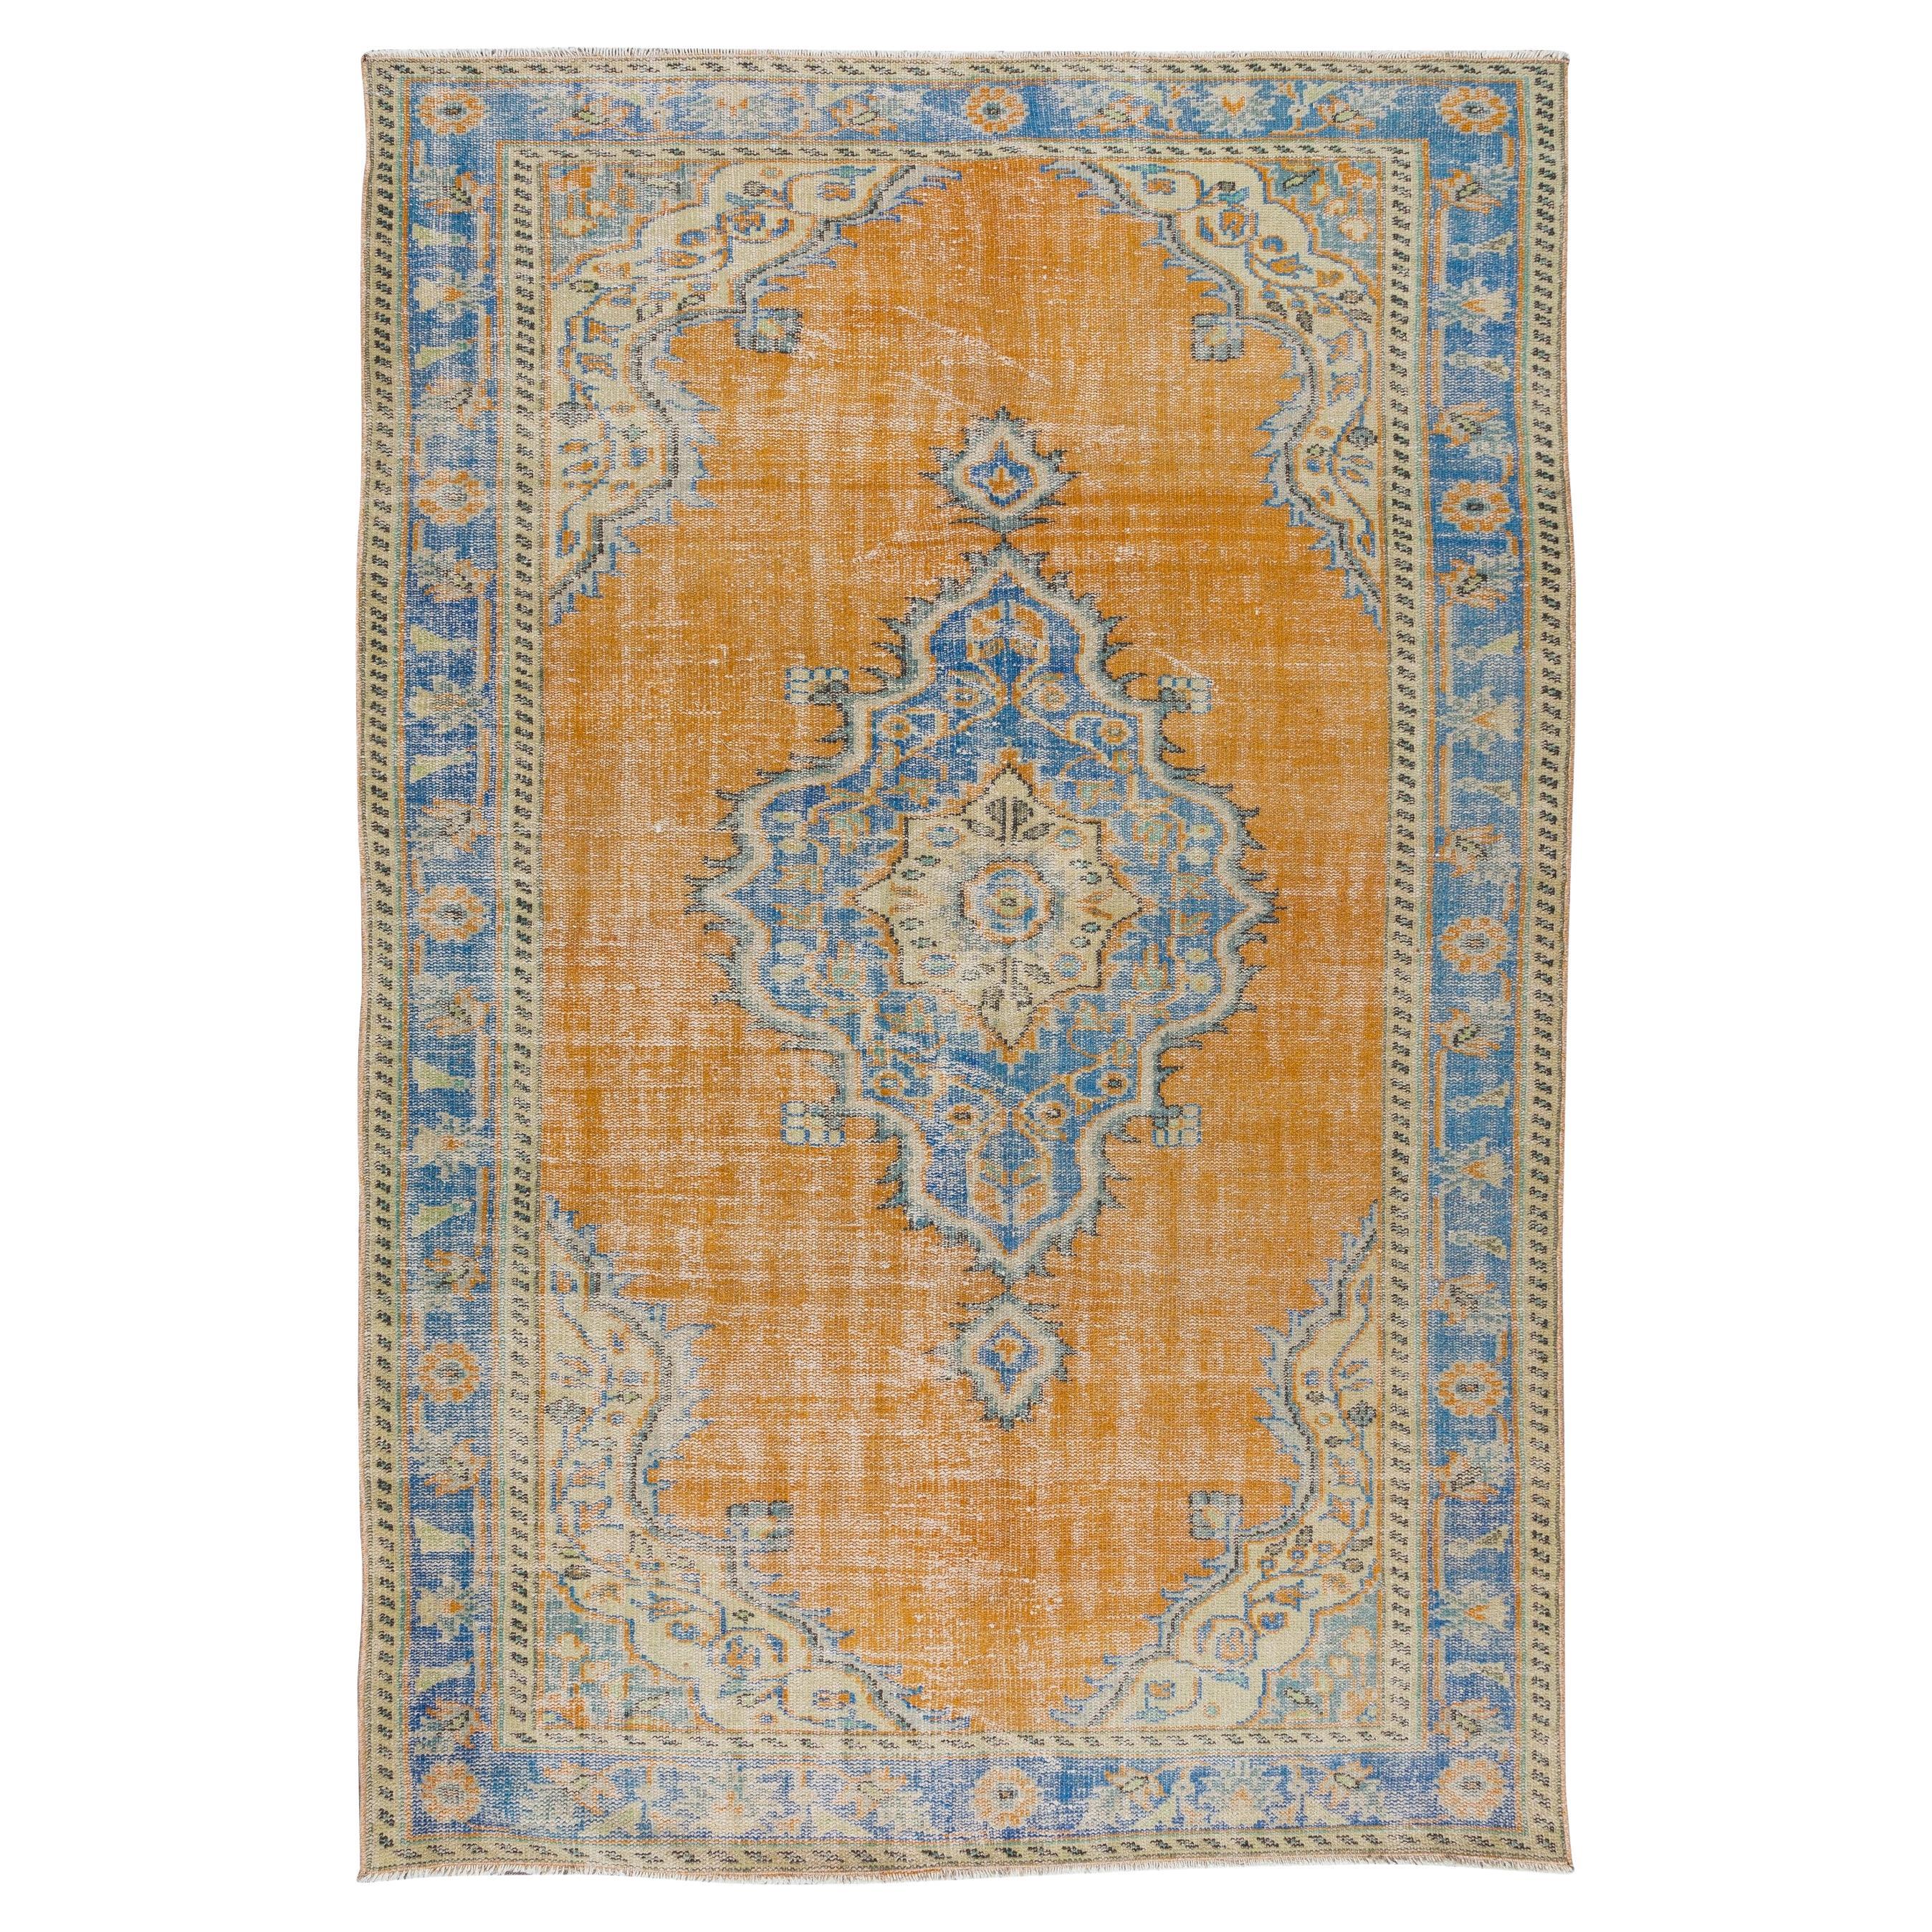 6x9 Ft Handmade Turkish Rug, 1960s Medallion Design Carpet in Orange & Navy Blue For Sale